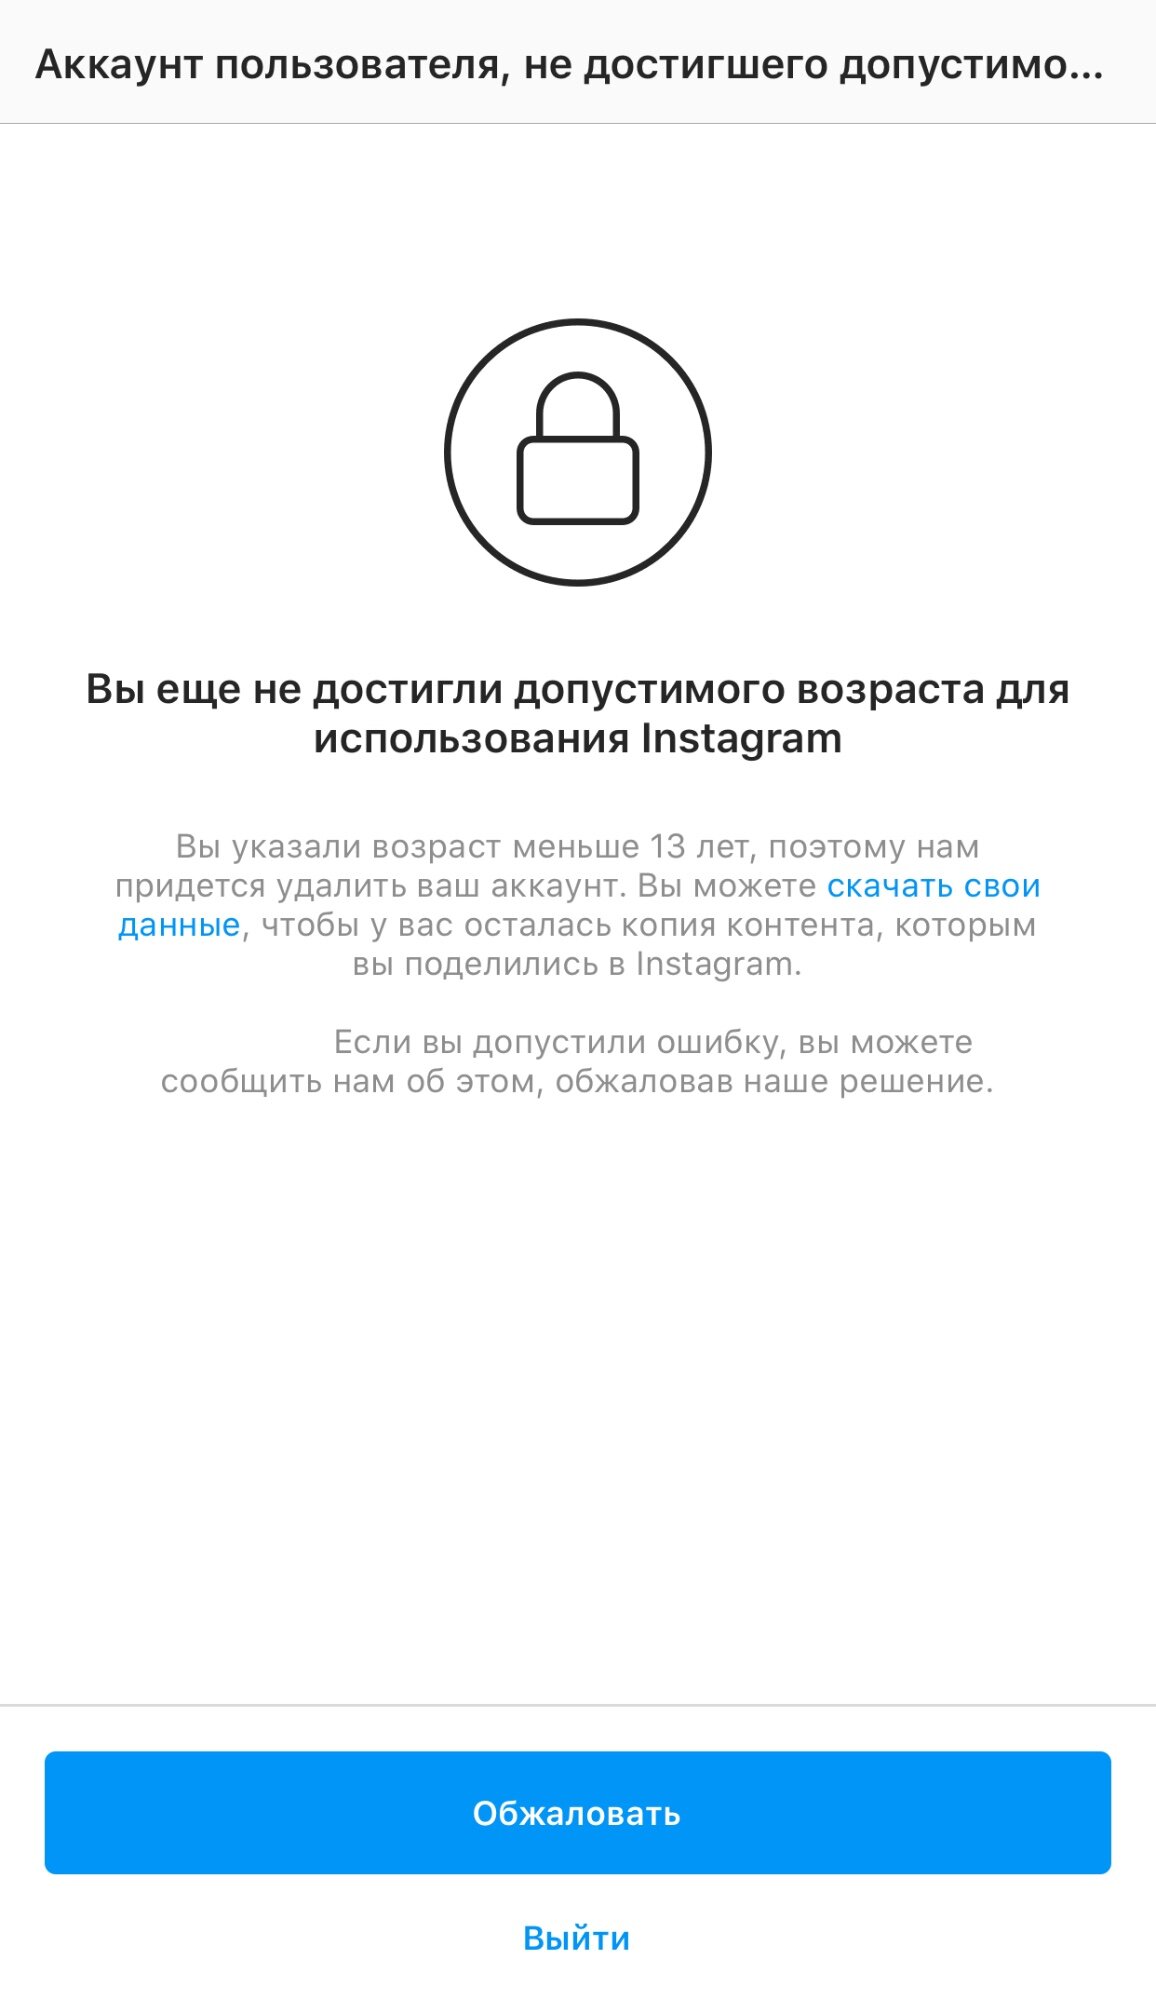 Ваш аккаунт заблокирован Инстаграм